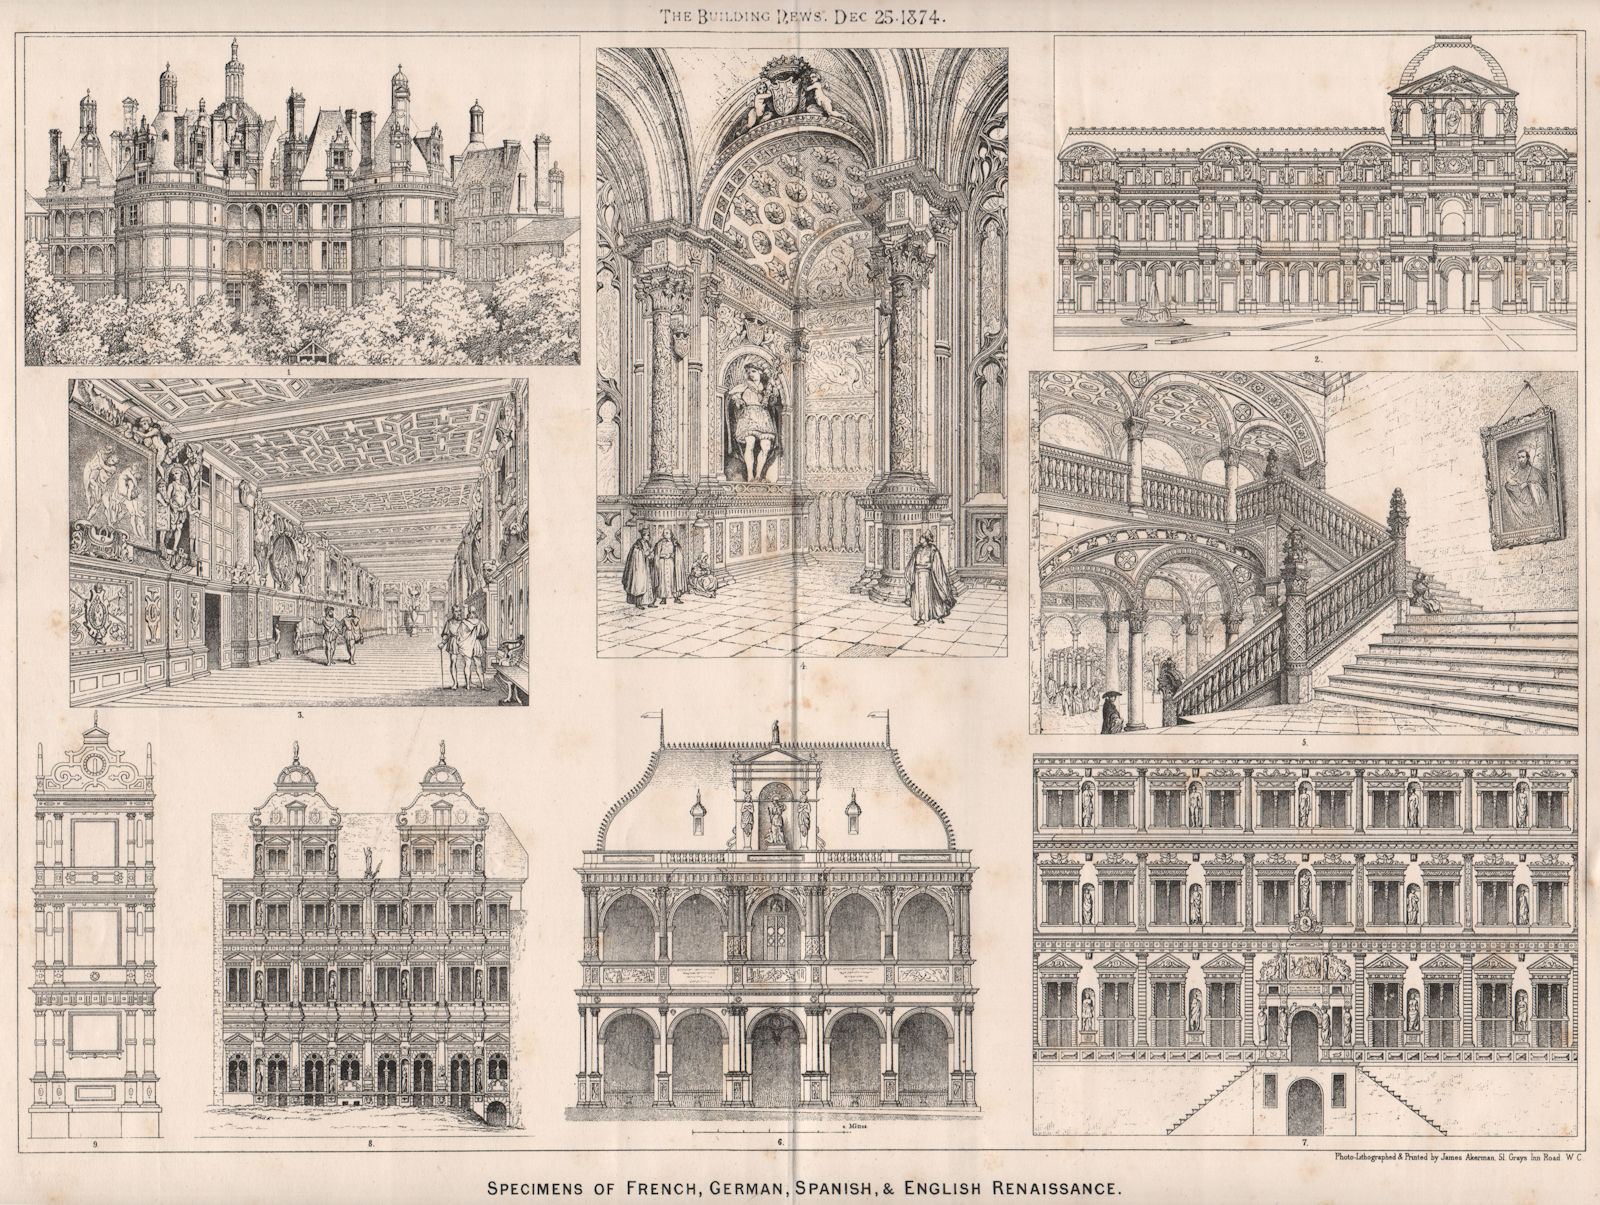 Associate Product Specimens of French, German, Spanish, & English Renaissance. Decorative 1874